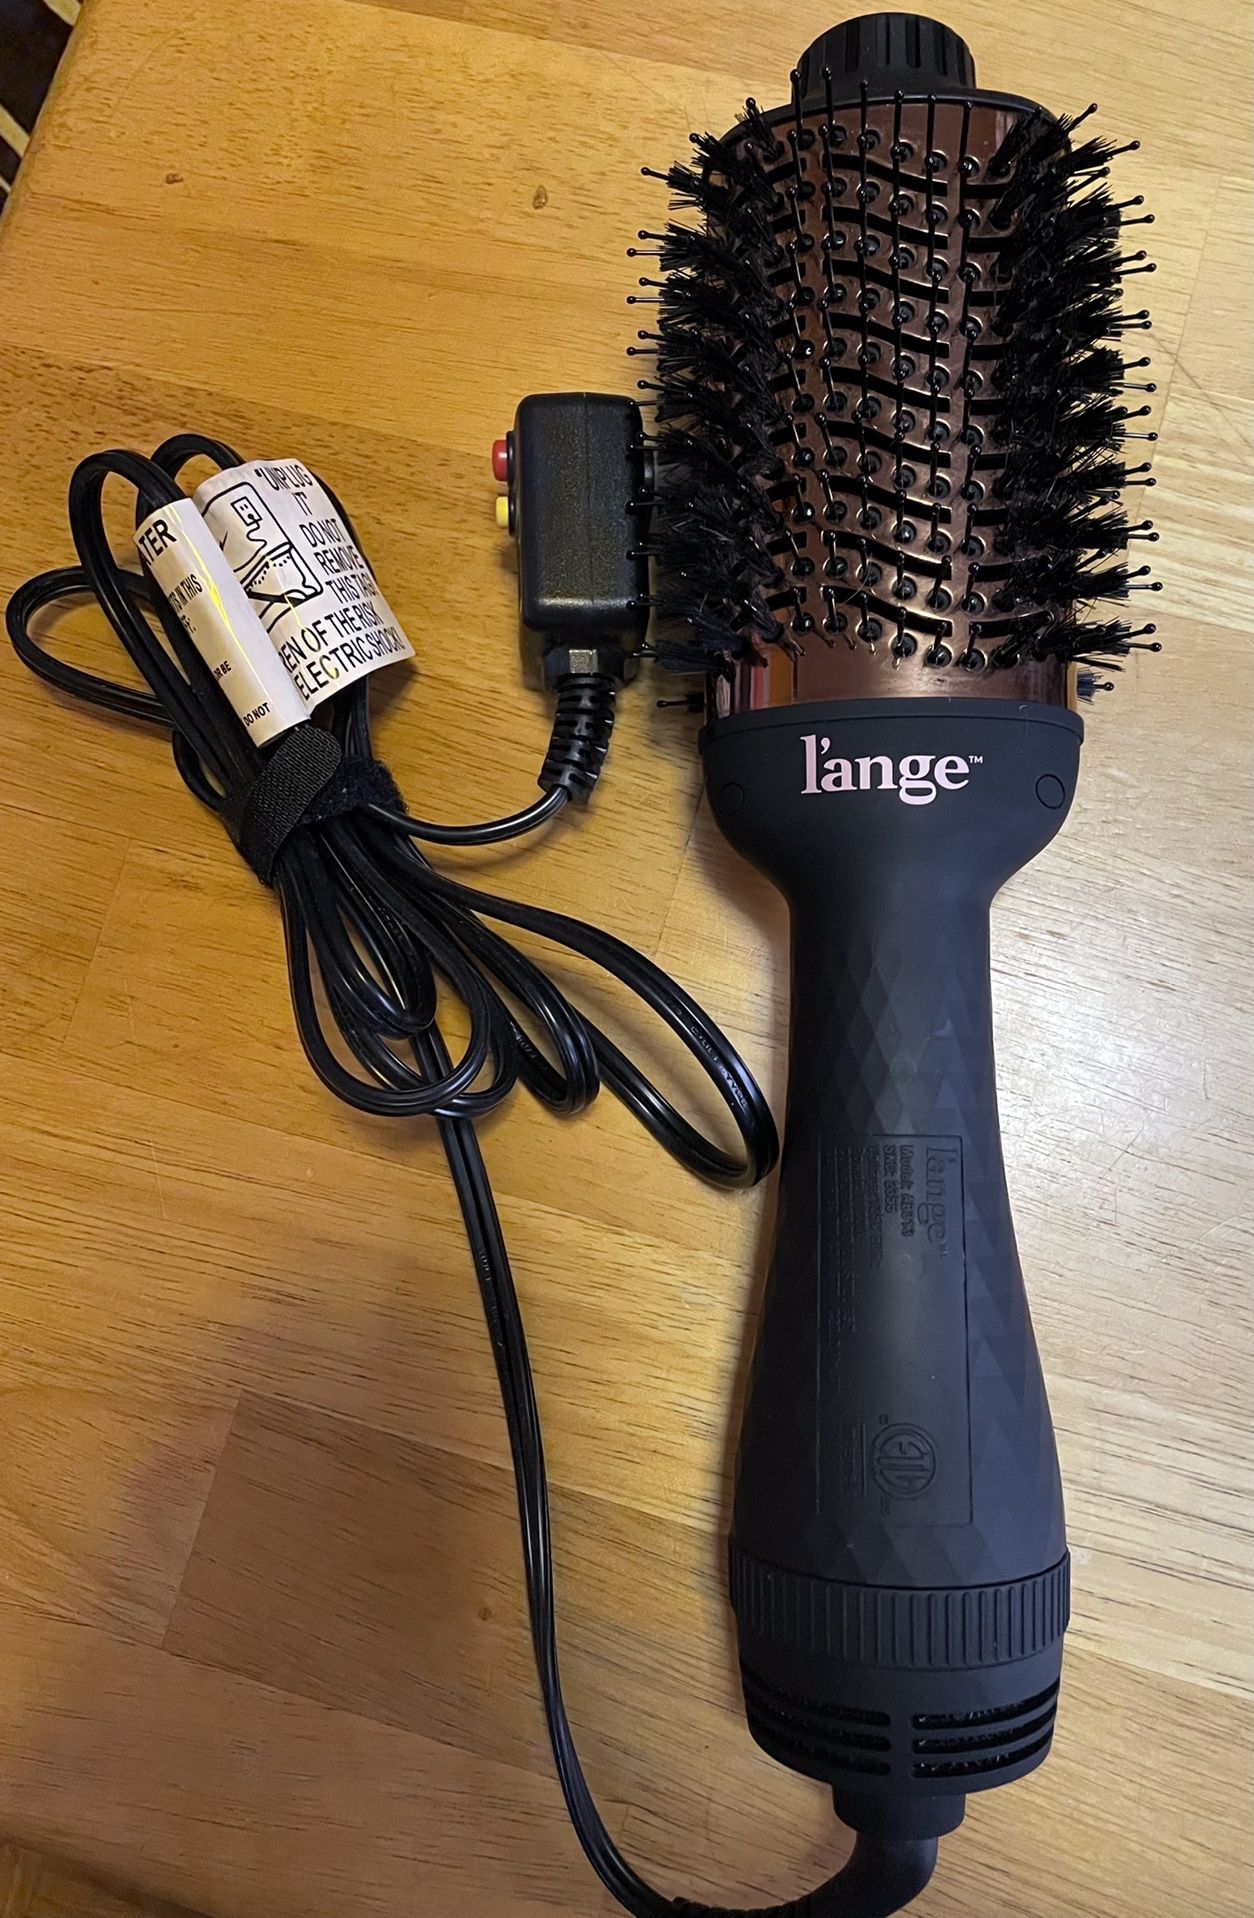 L’ange Pro Brush Hair Straightener And Dryer